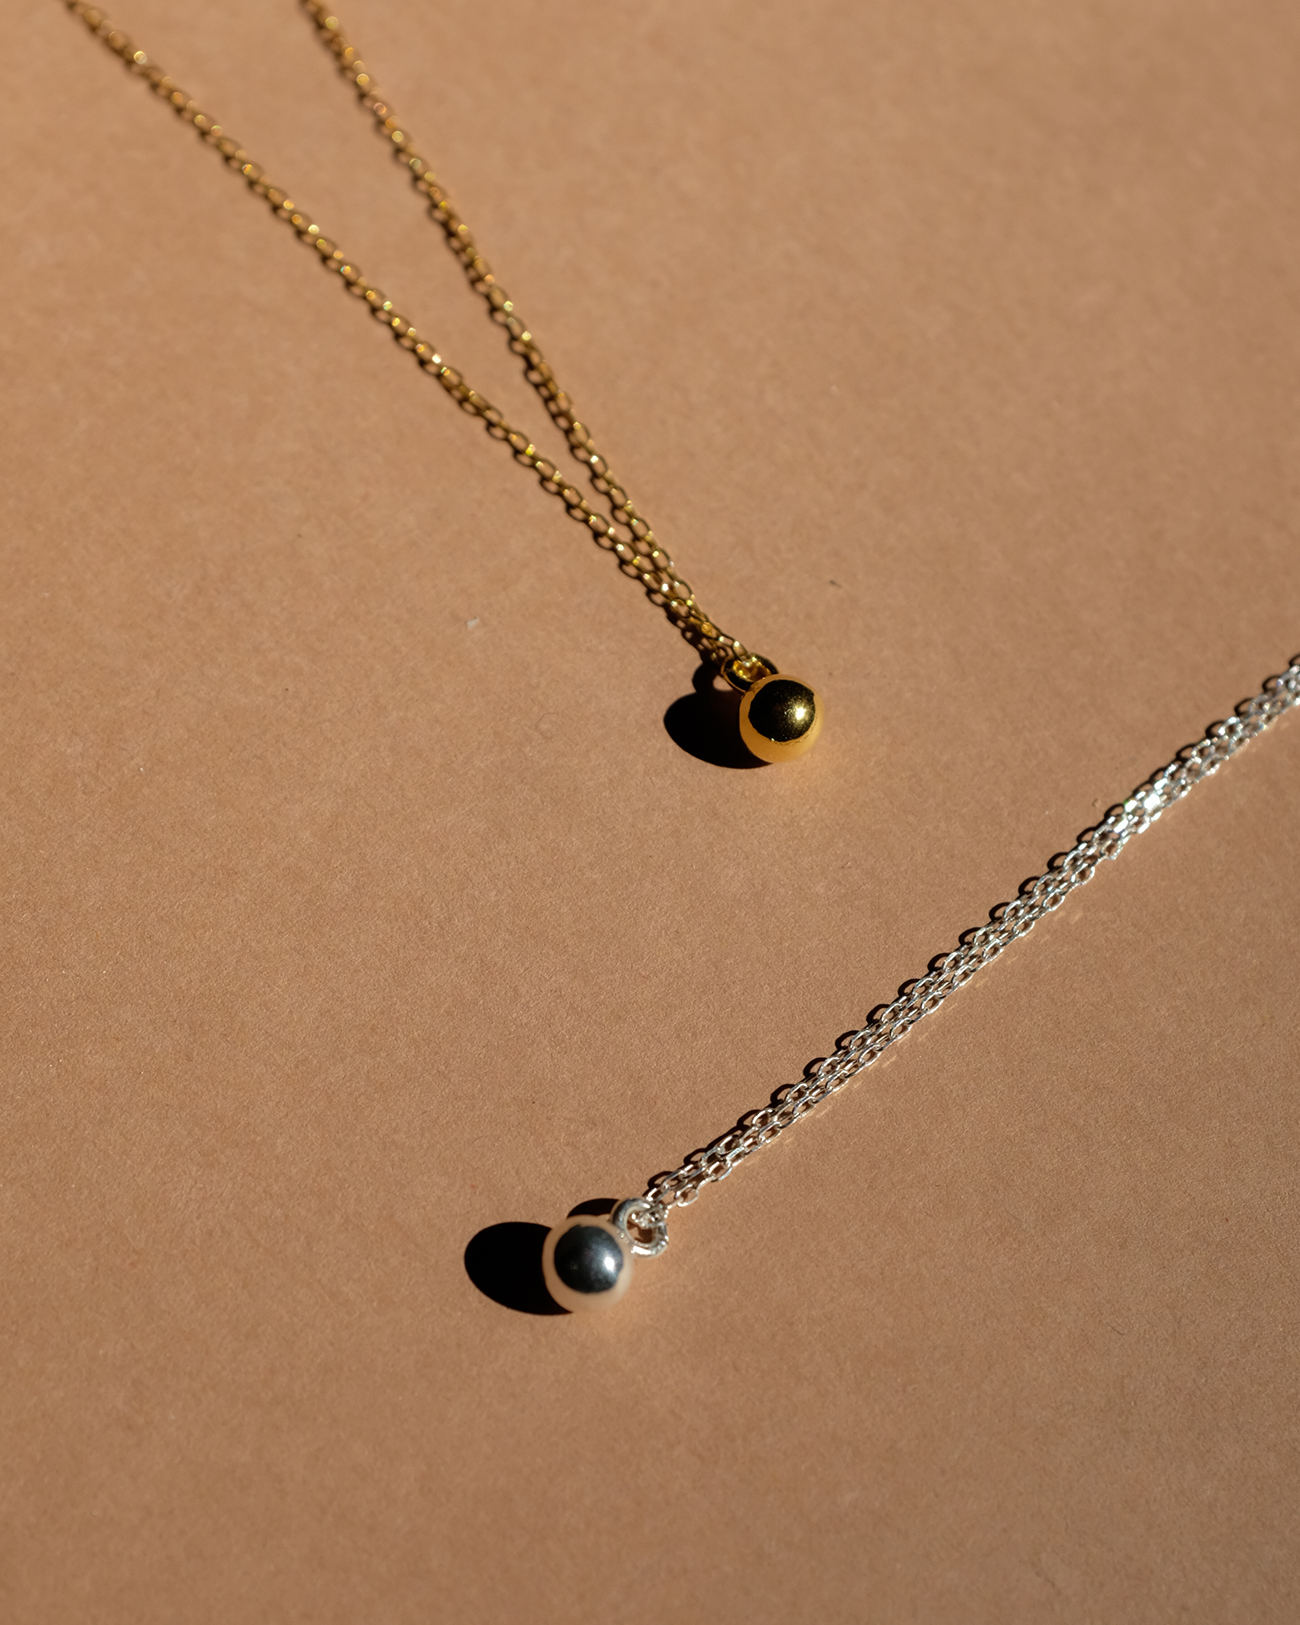 metaformi_design_jewelry_gold_silver_ball_necklace